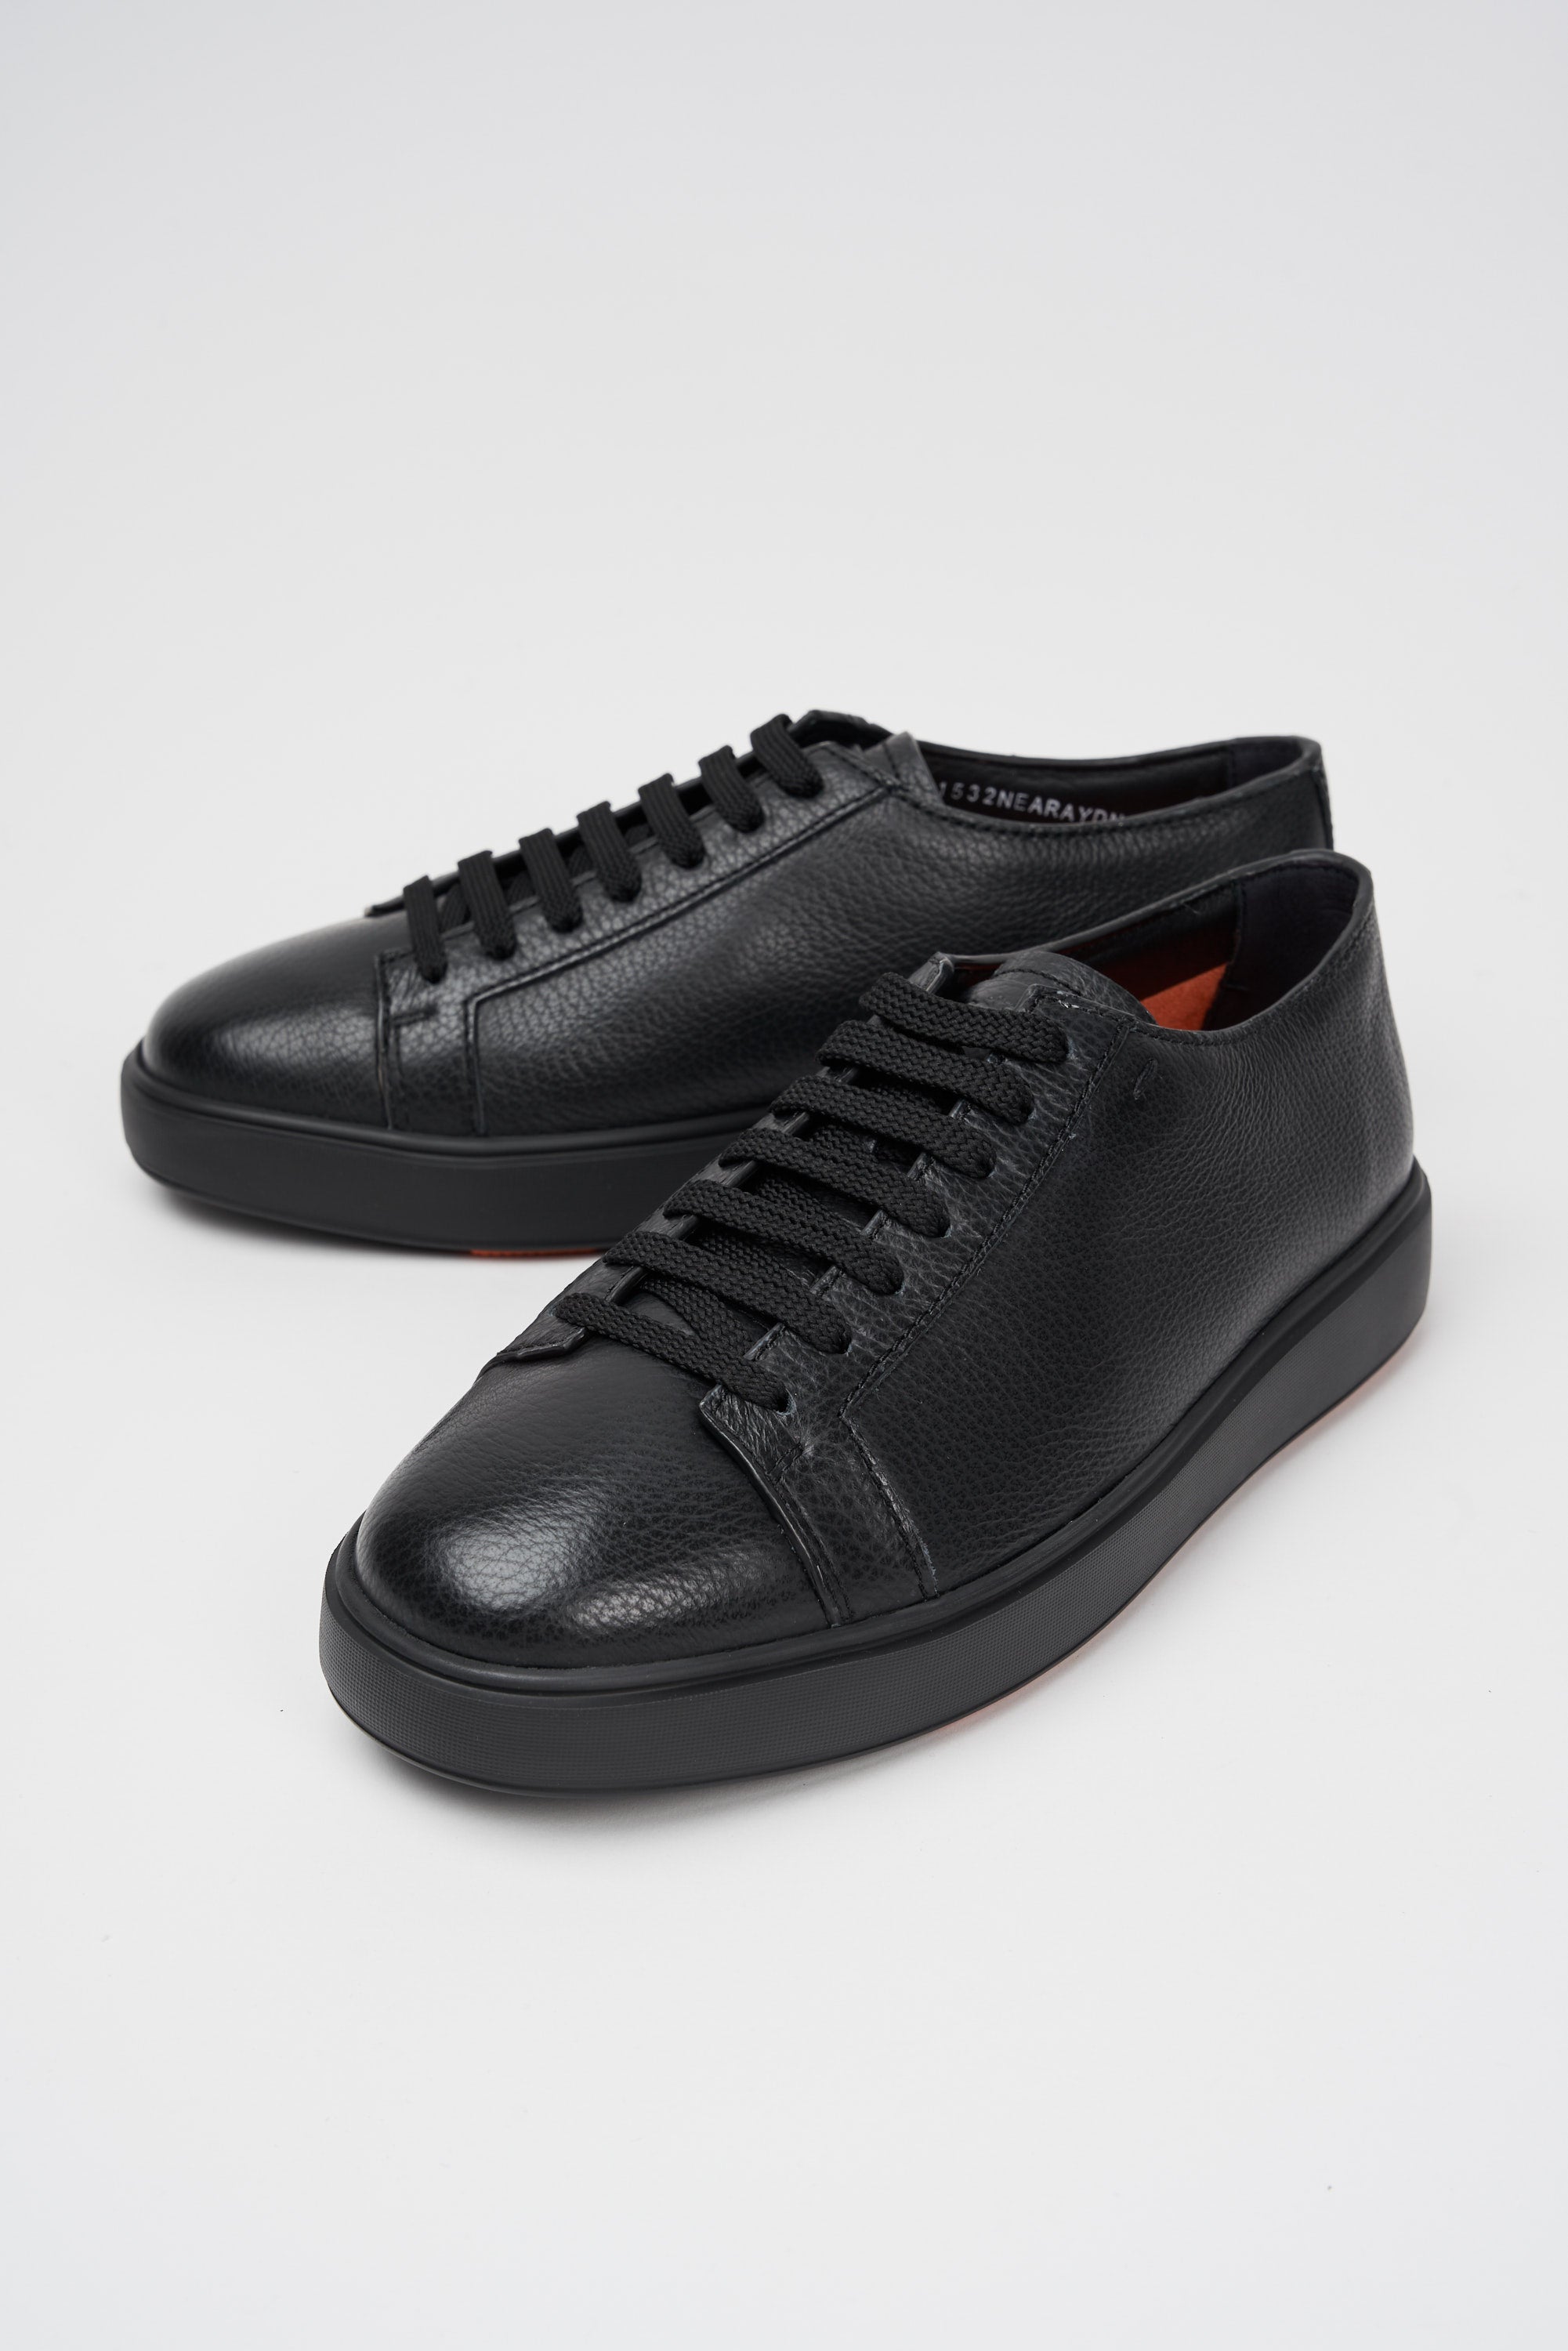 Santoni Leather Sneakers Black-6